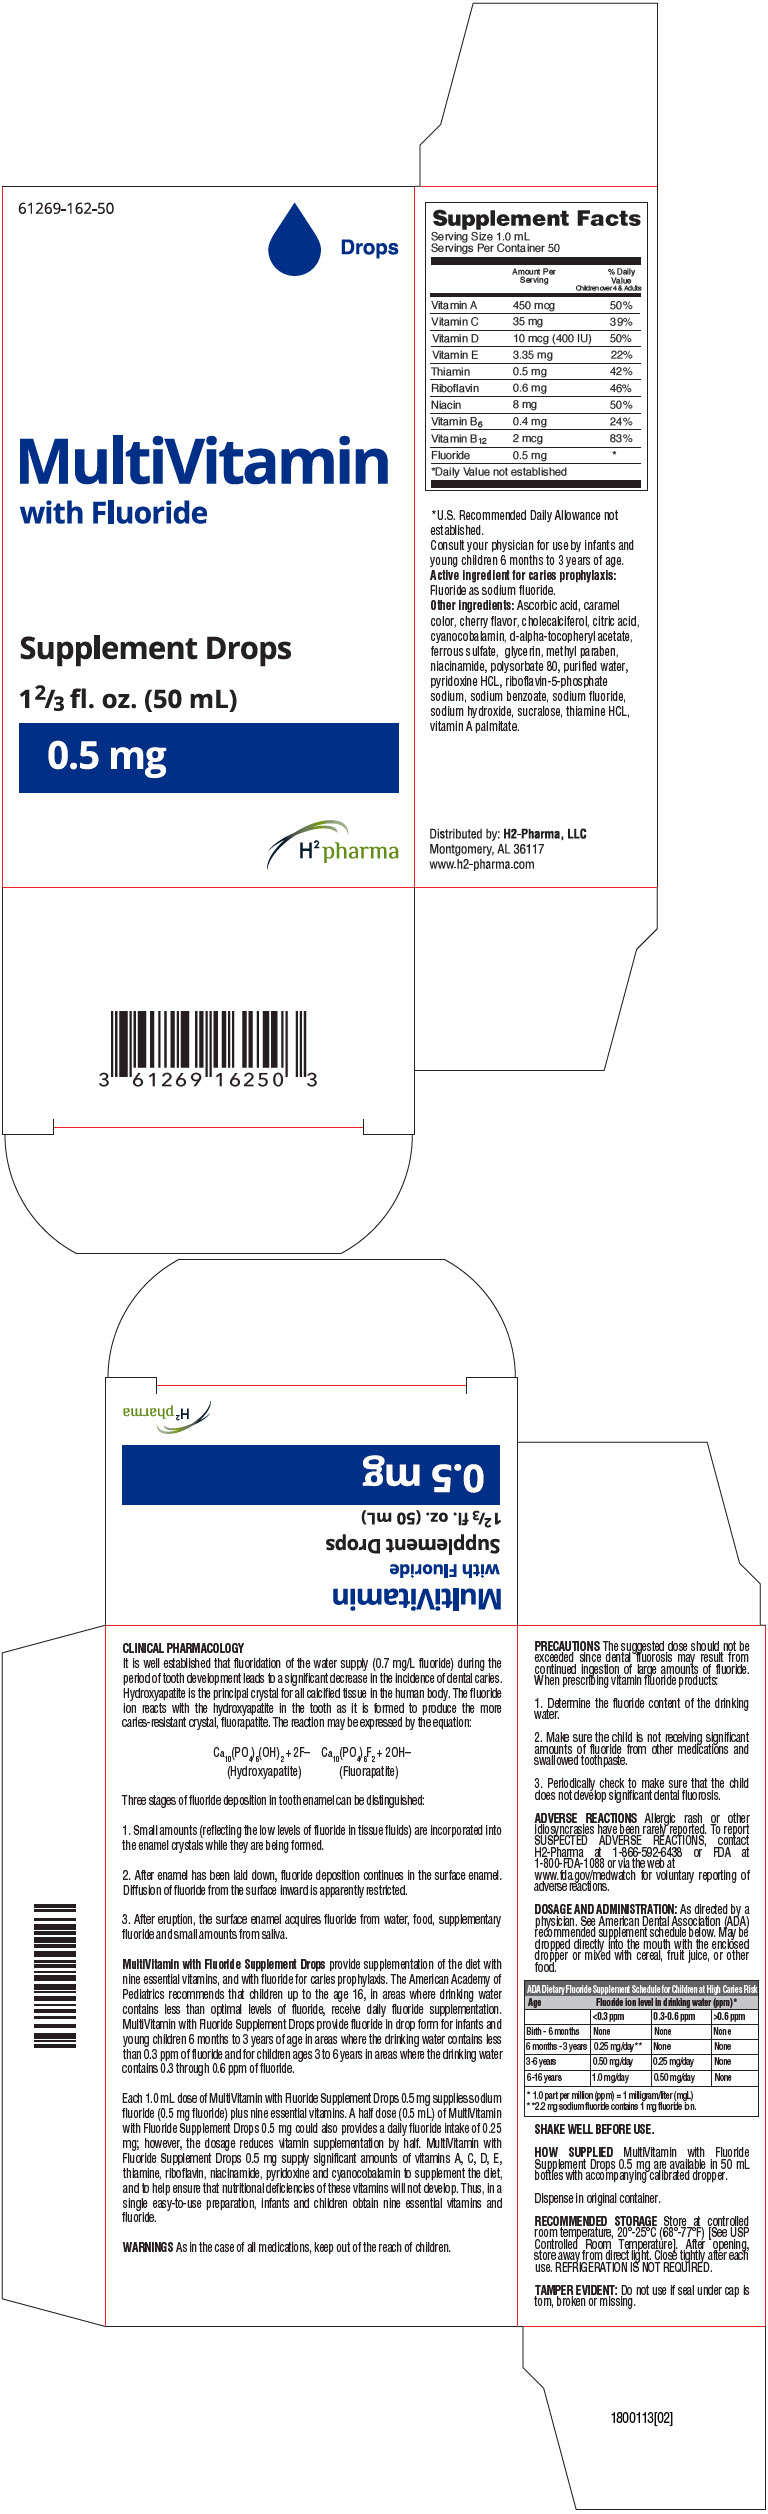 PRINCIPAL DISPLAY PANEL - 50 mL Bottle Carton